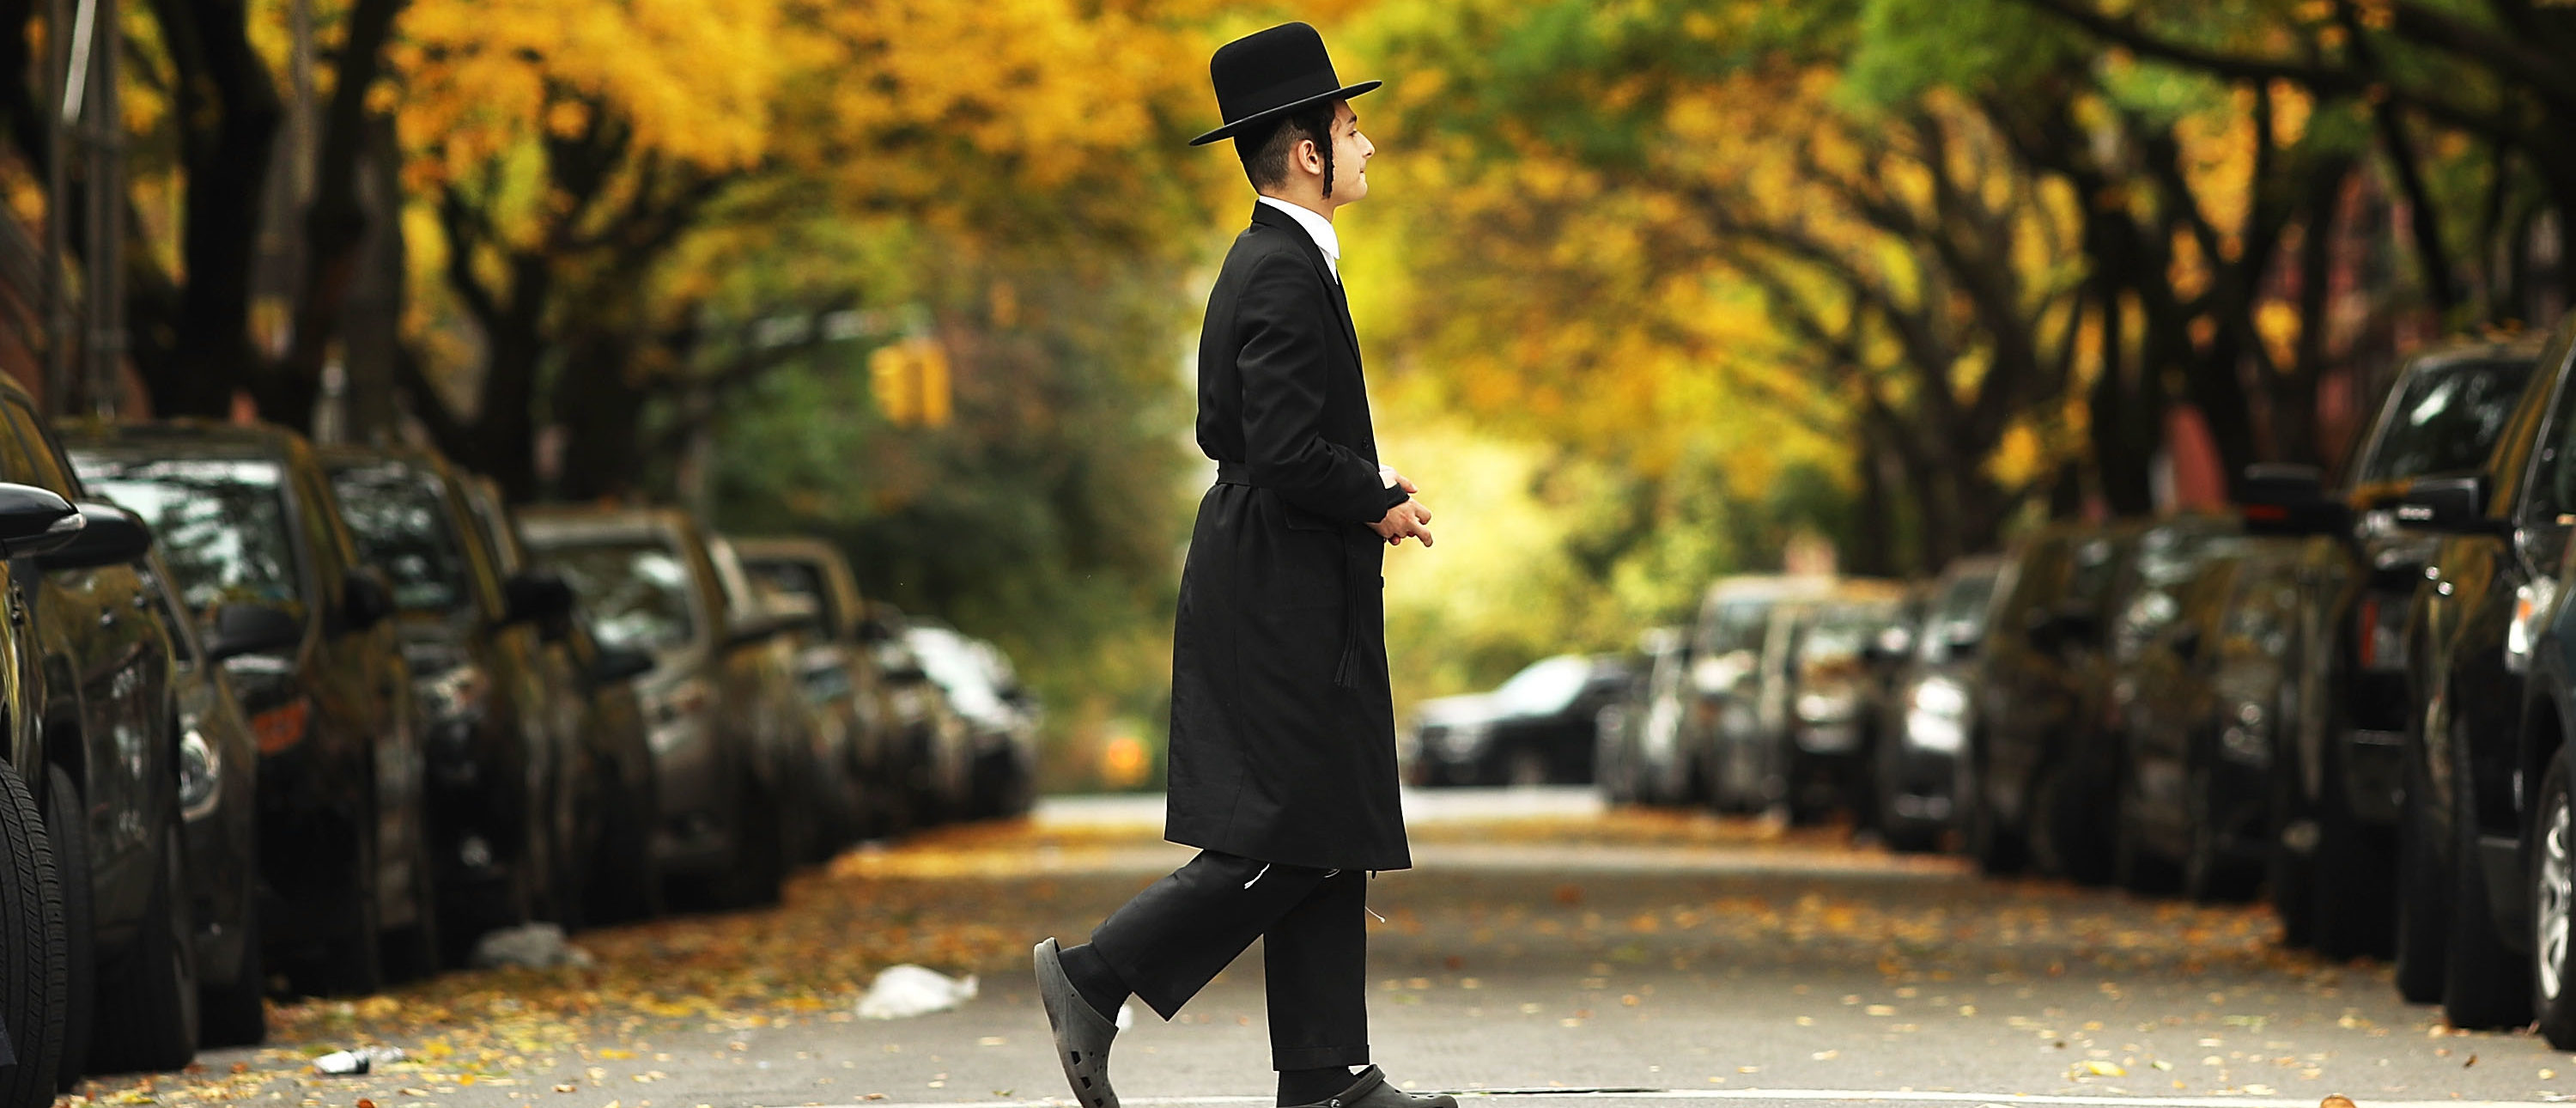 A member of an Orthodox Jewish community in Williamsburg, Brooklyn